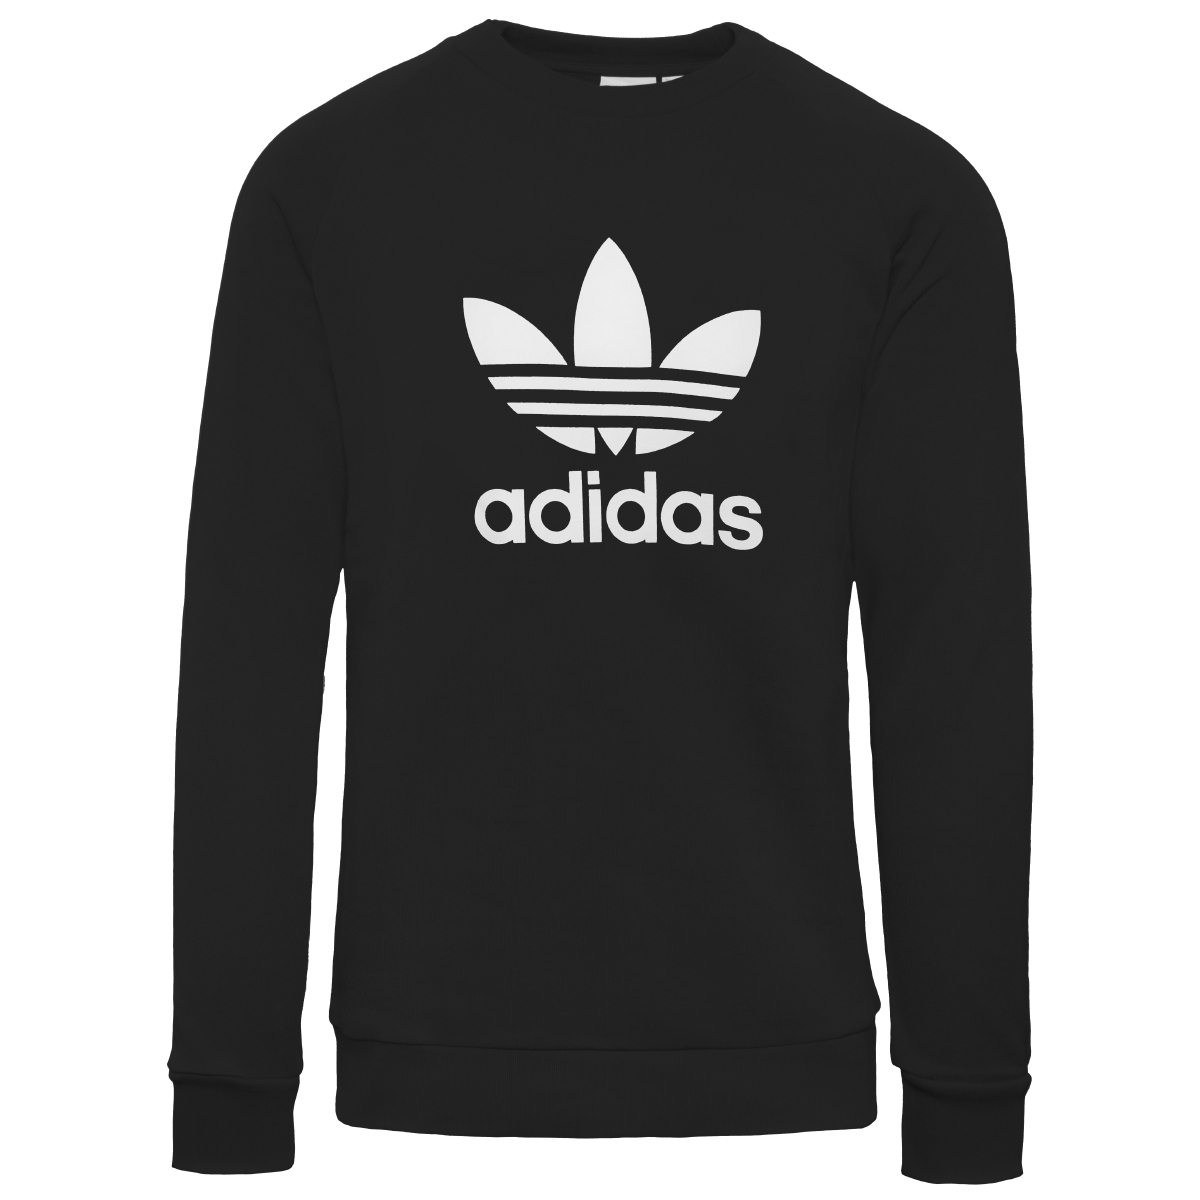 Adidas Trefoil Crew Sweatshirt Women schwarz